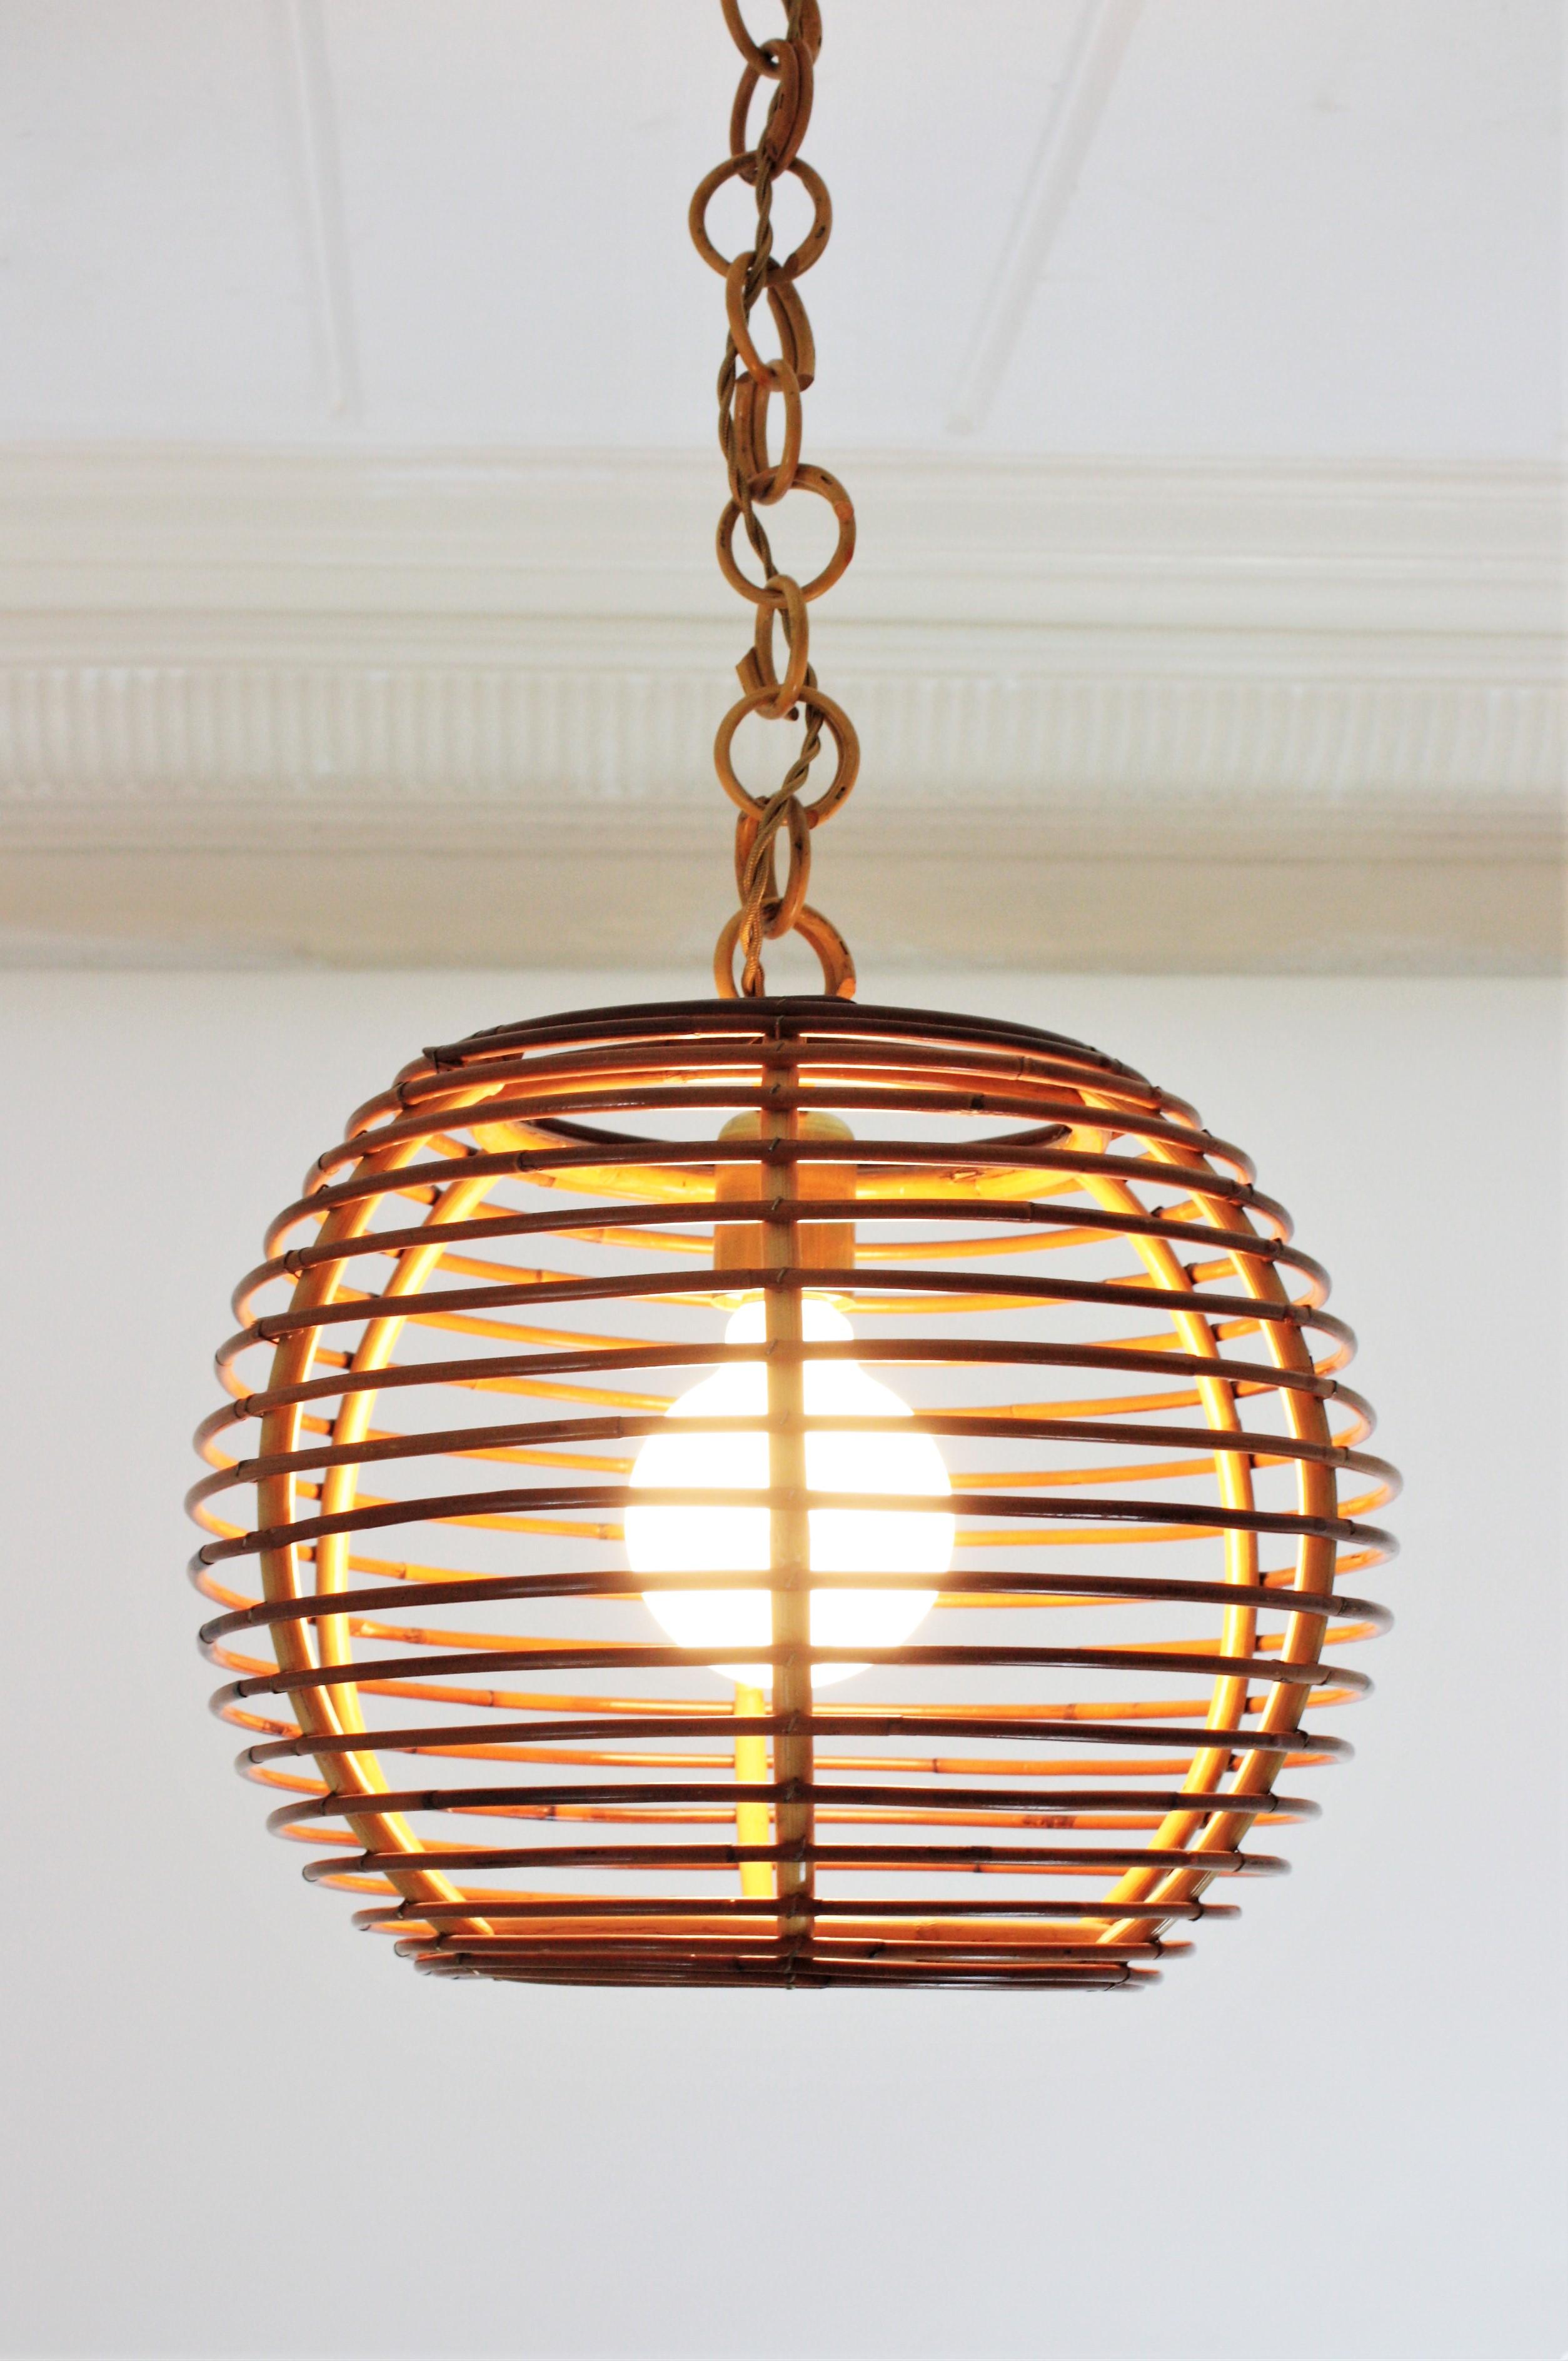 Rattan Globe Pendant or Hanging Light, Spain, 1960s For Sale 1